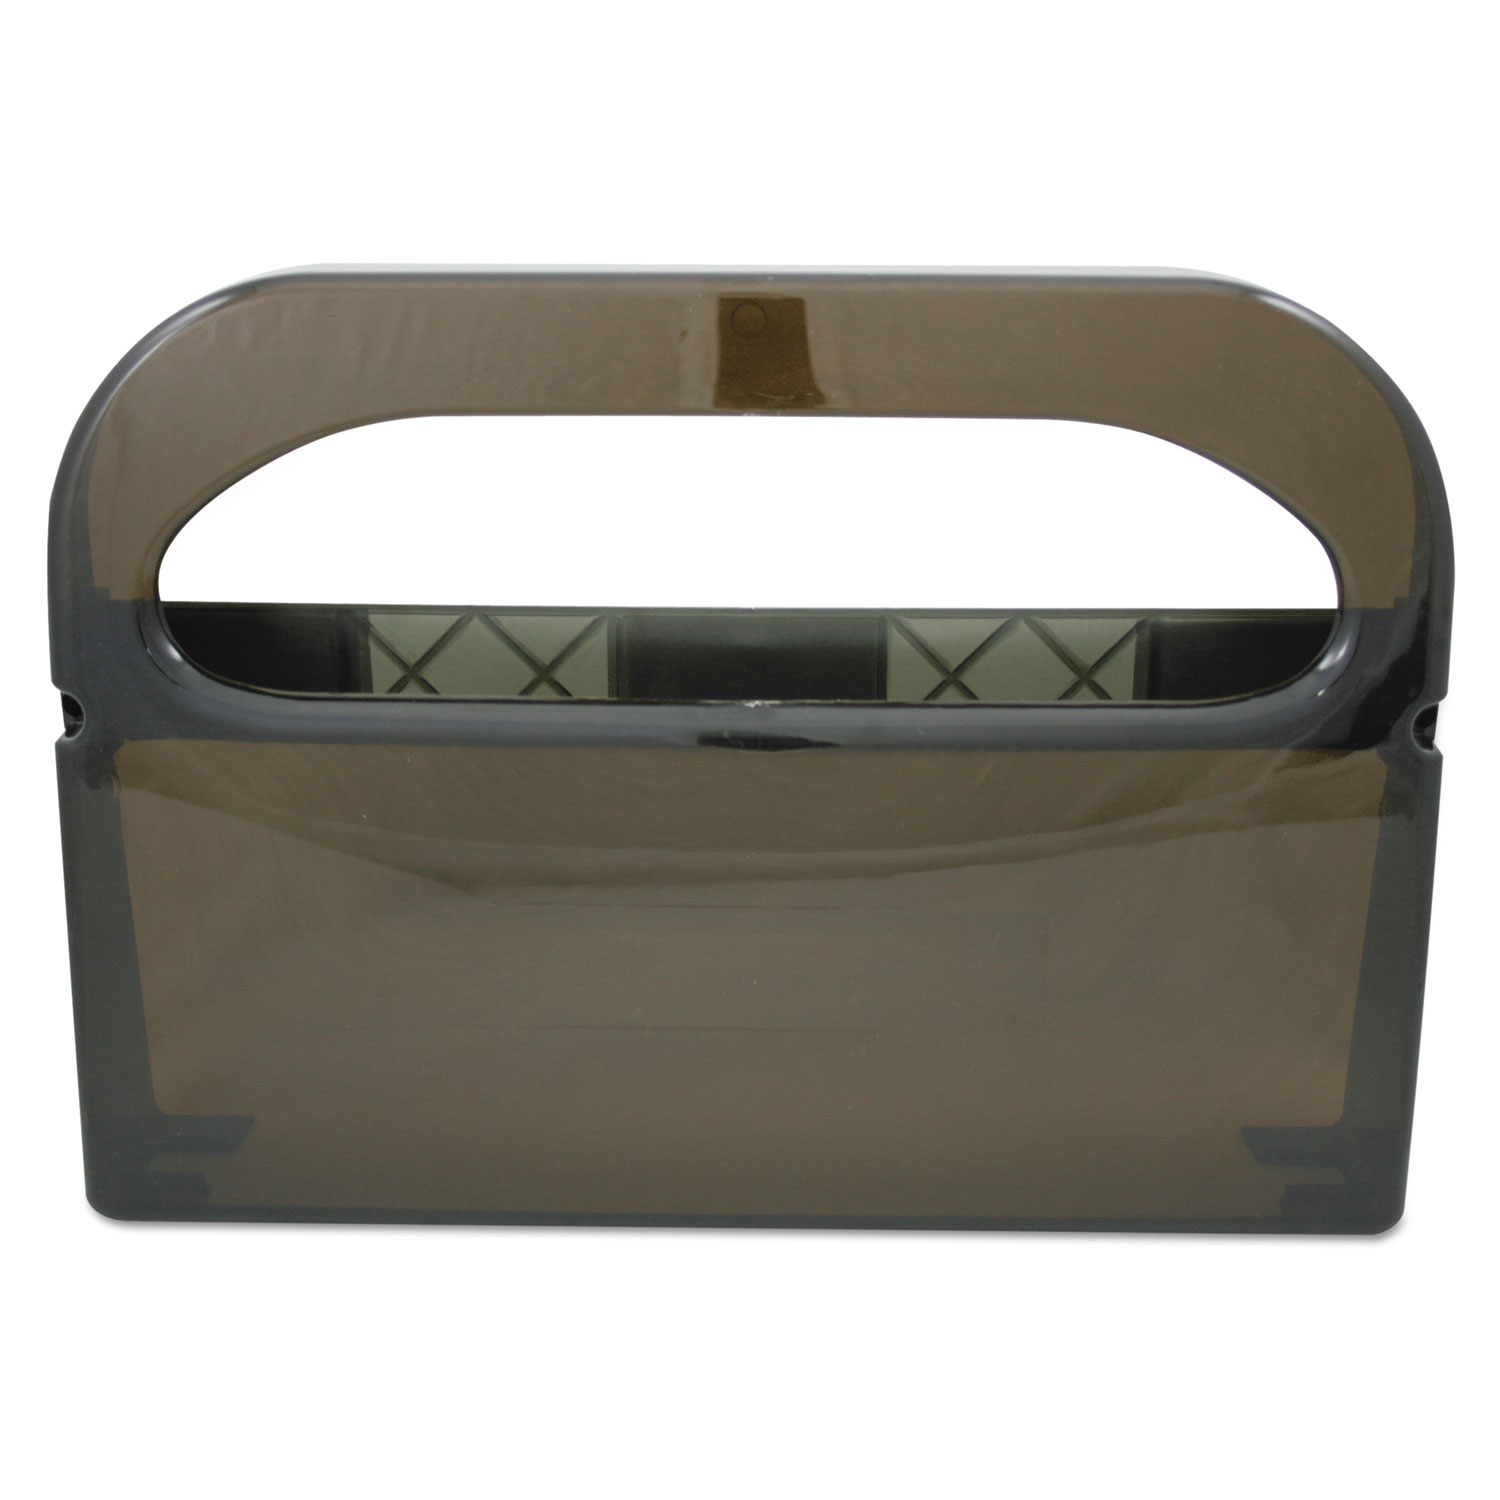 Health Gards® Half-Fold Toilet Seat Cover Dispenser- Smoke, 16